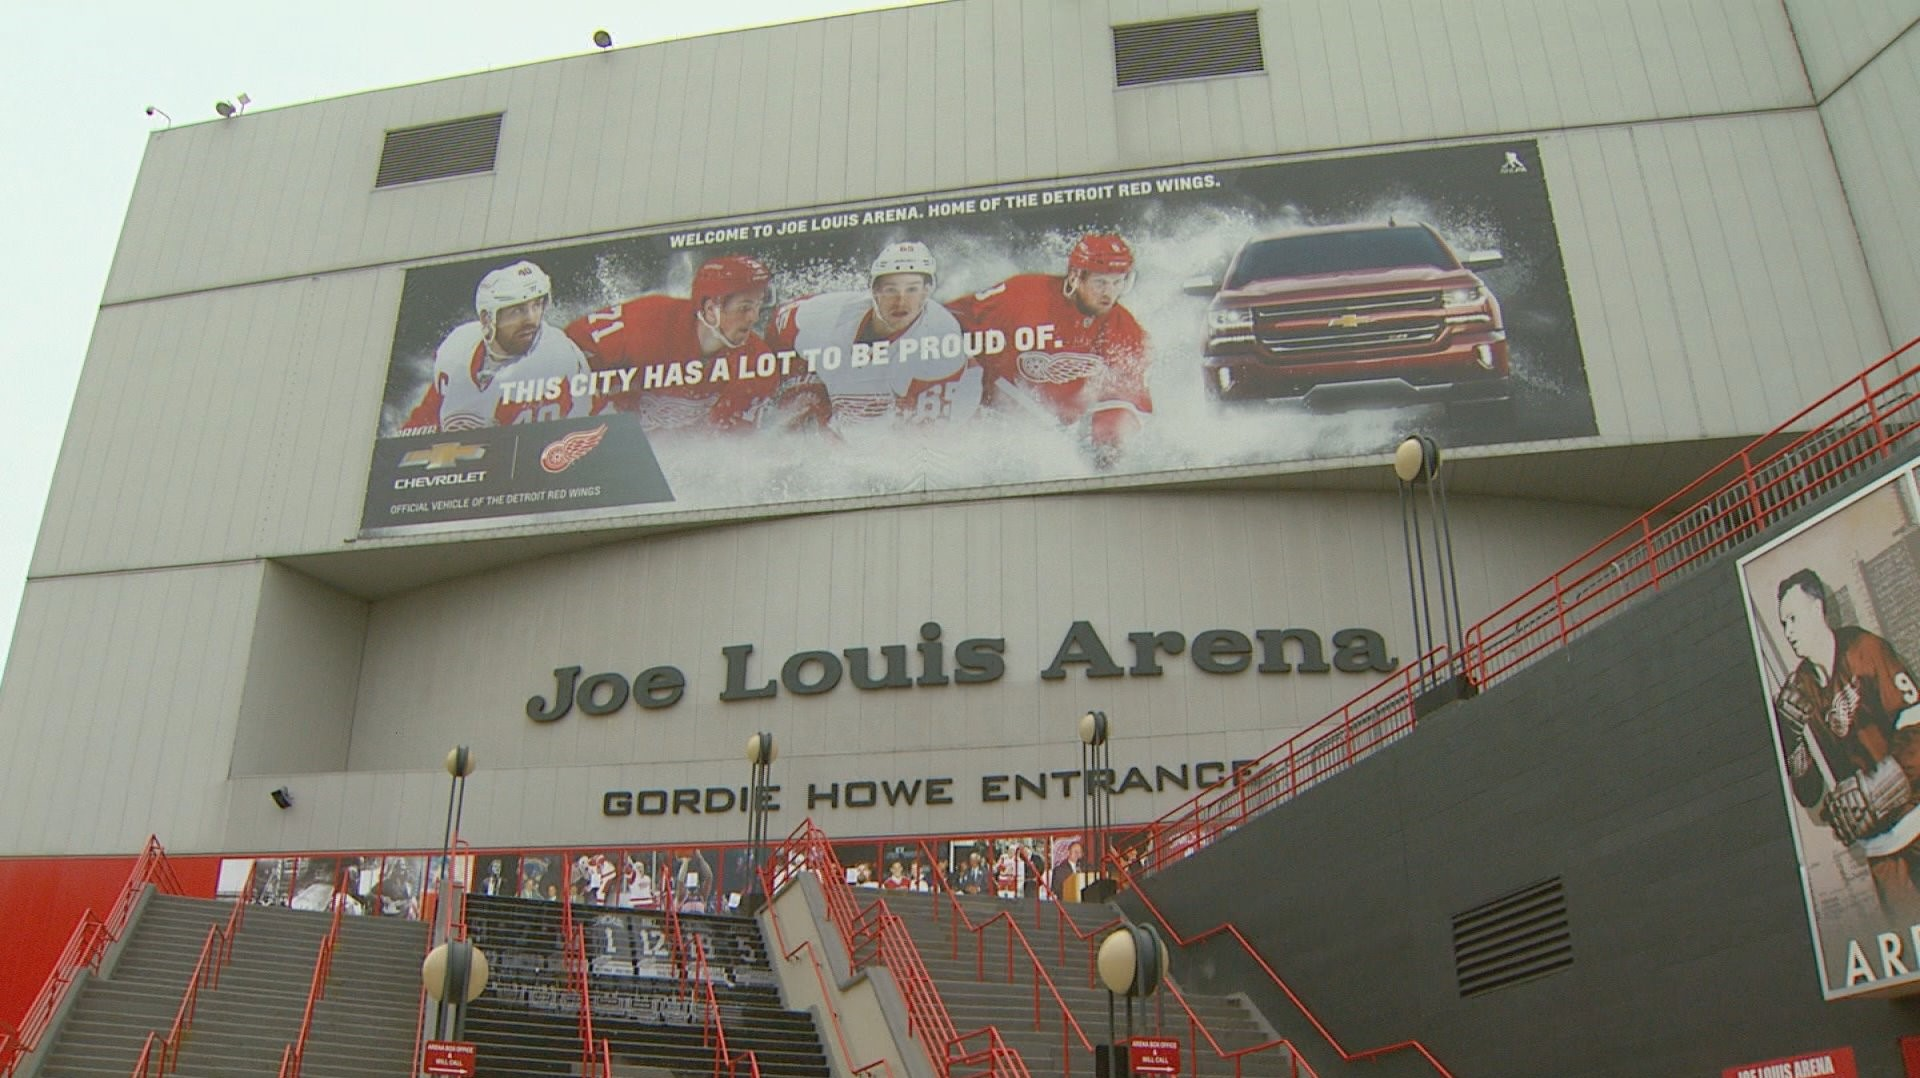 Red Wings beat Devils 4-1 in last game at Joe Louis Arena